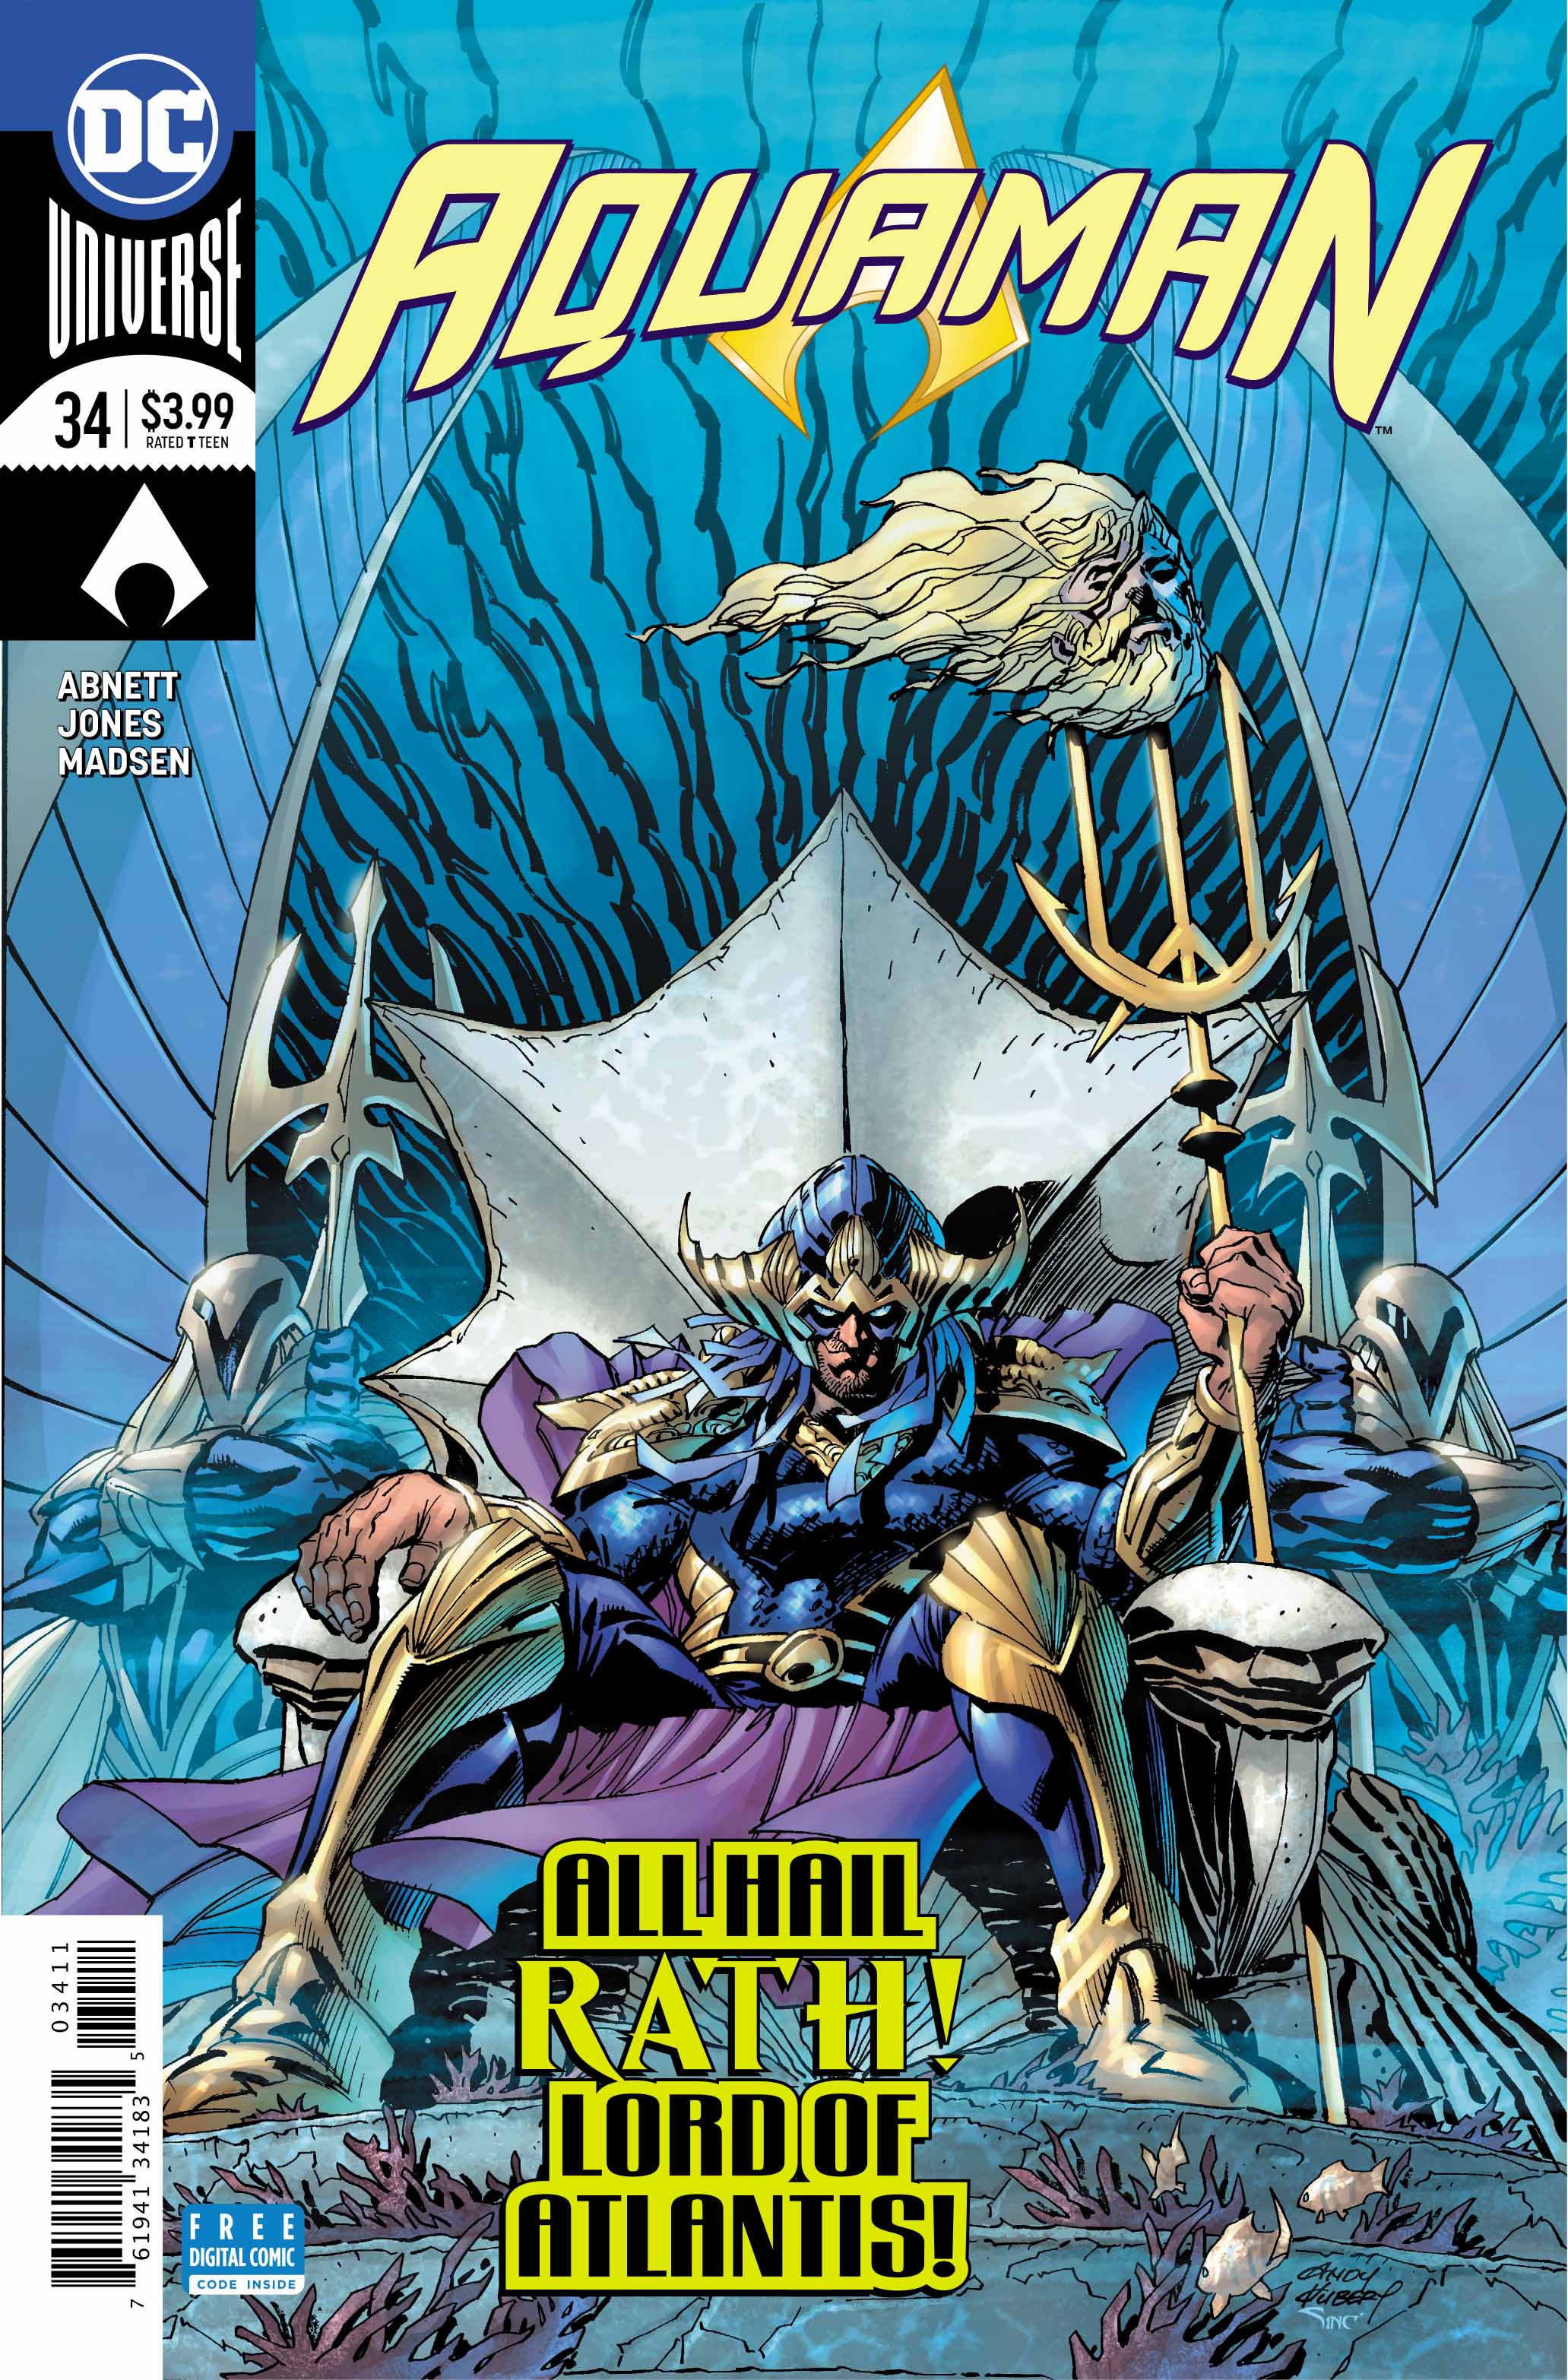 Aquaman #34 Review